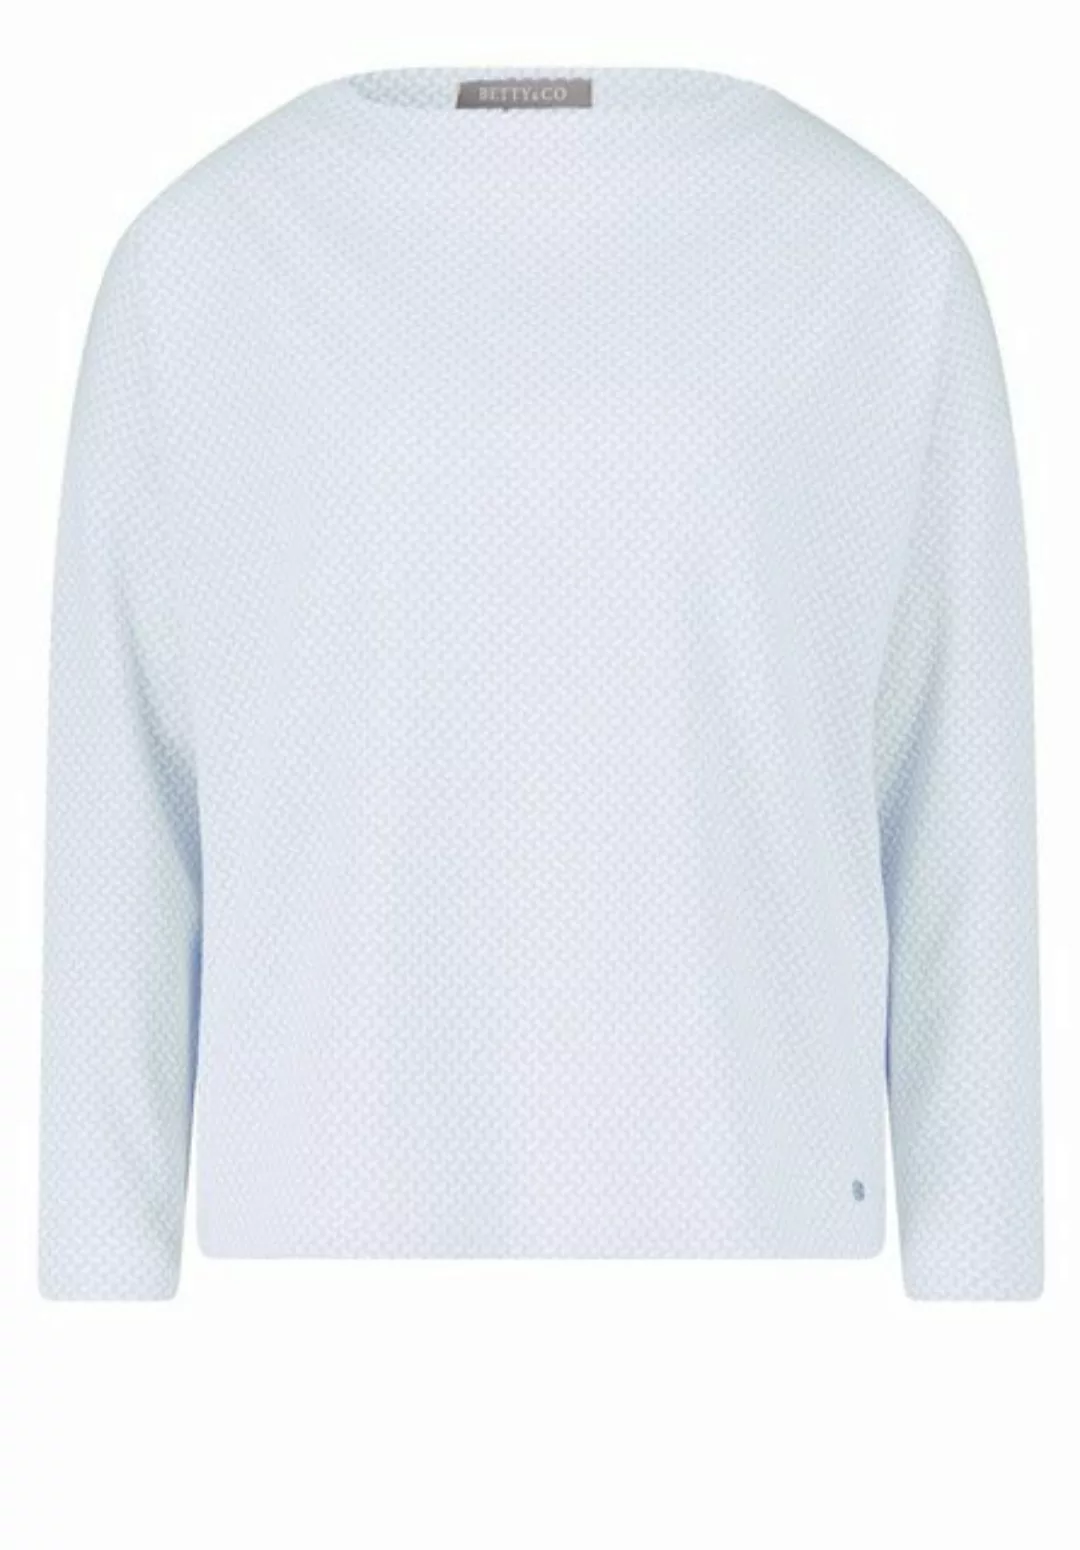 Betty&Co Shirtbluse Shirt Kurz 1/1 Arm günstig online kaufen